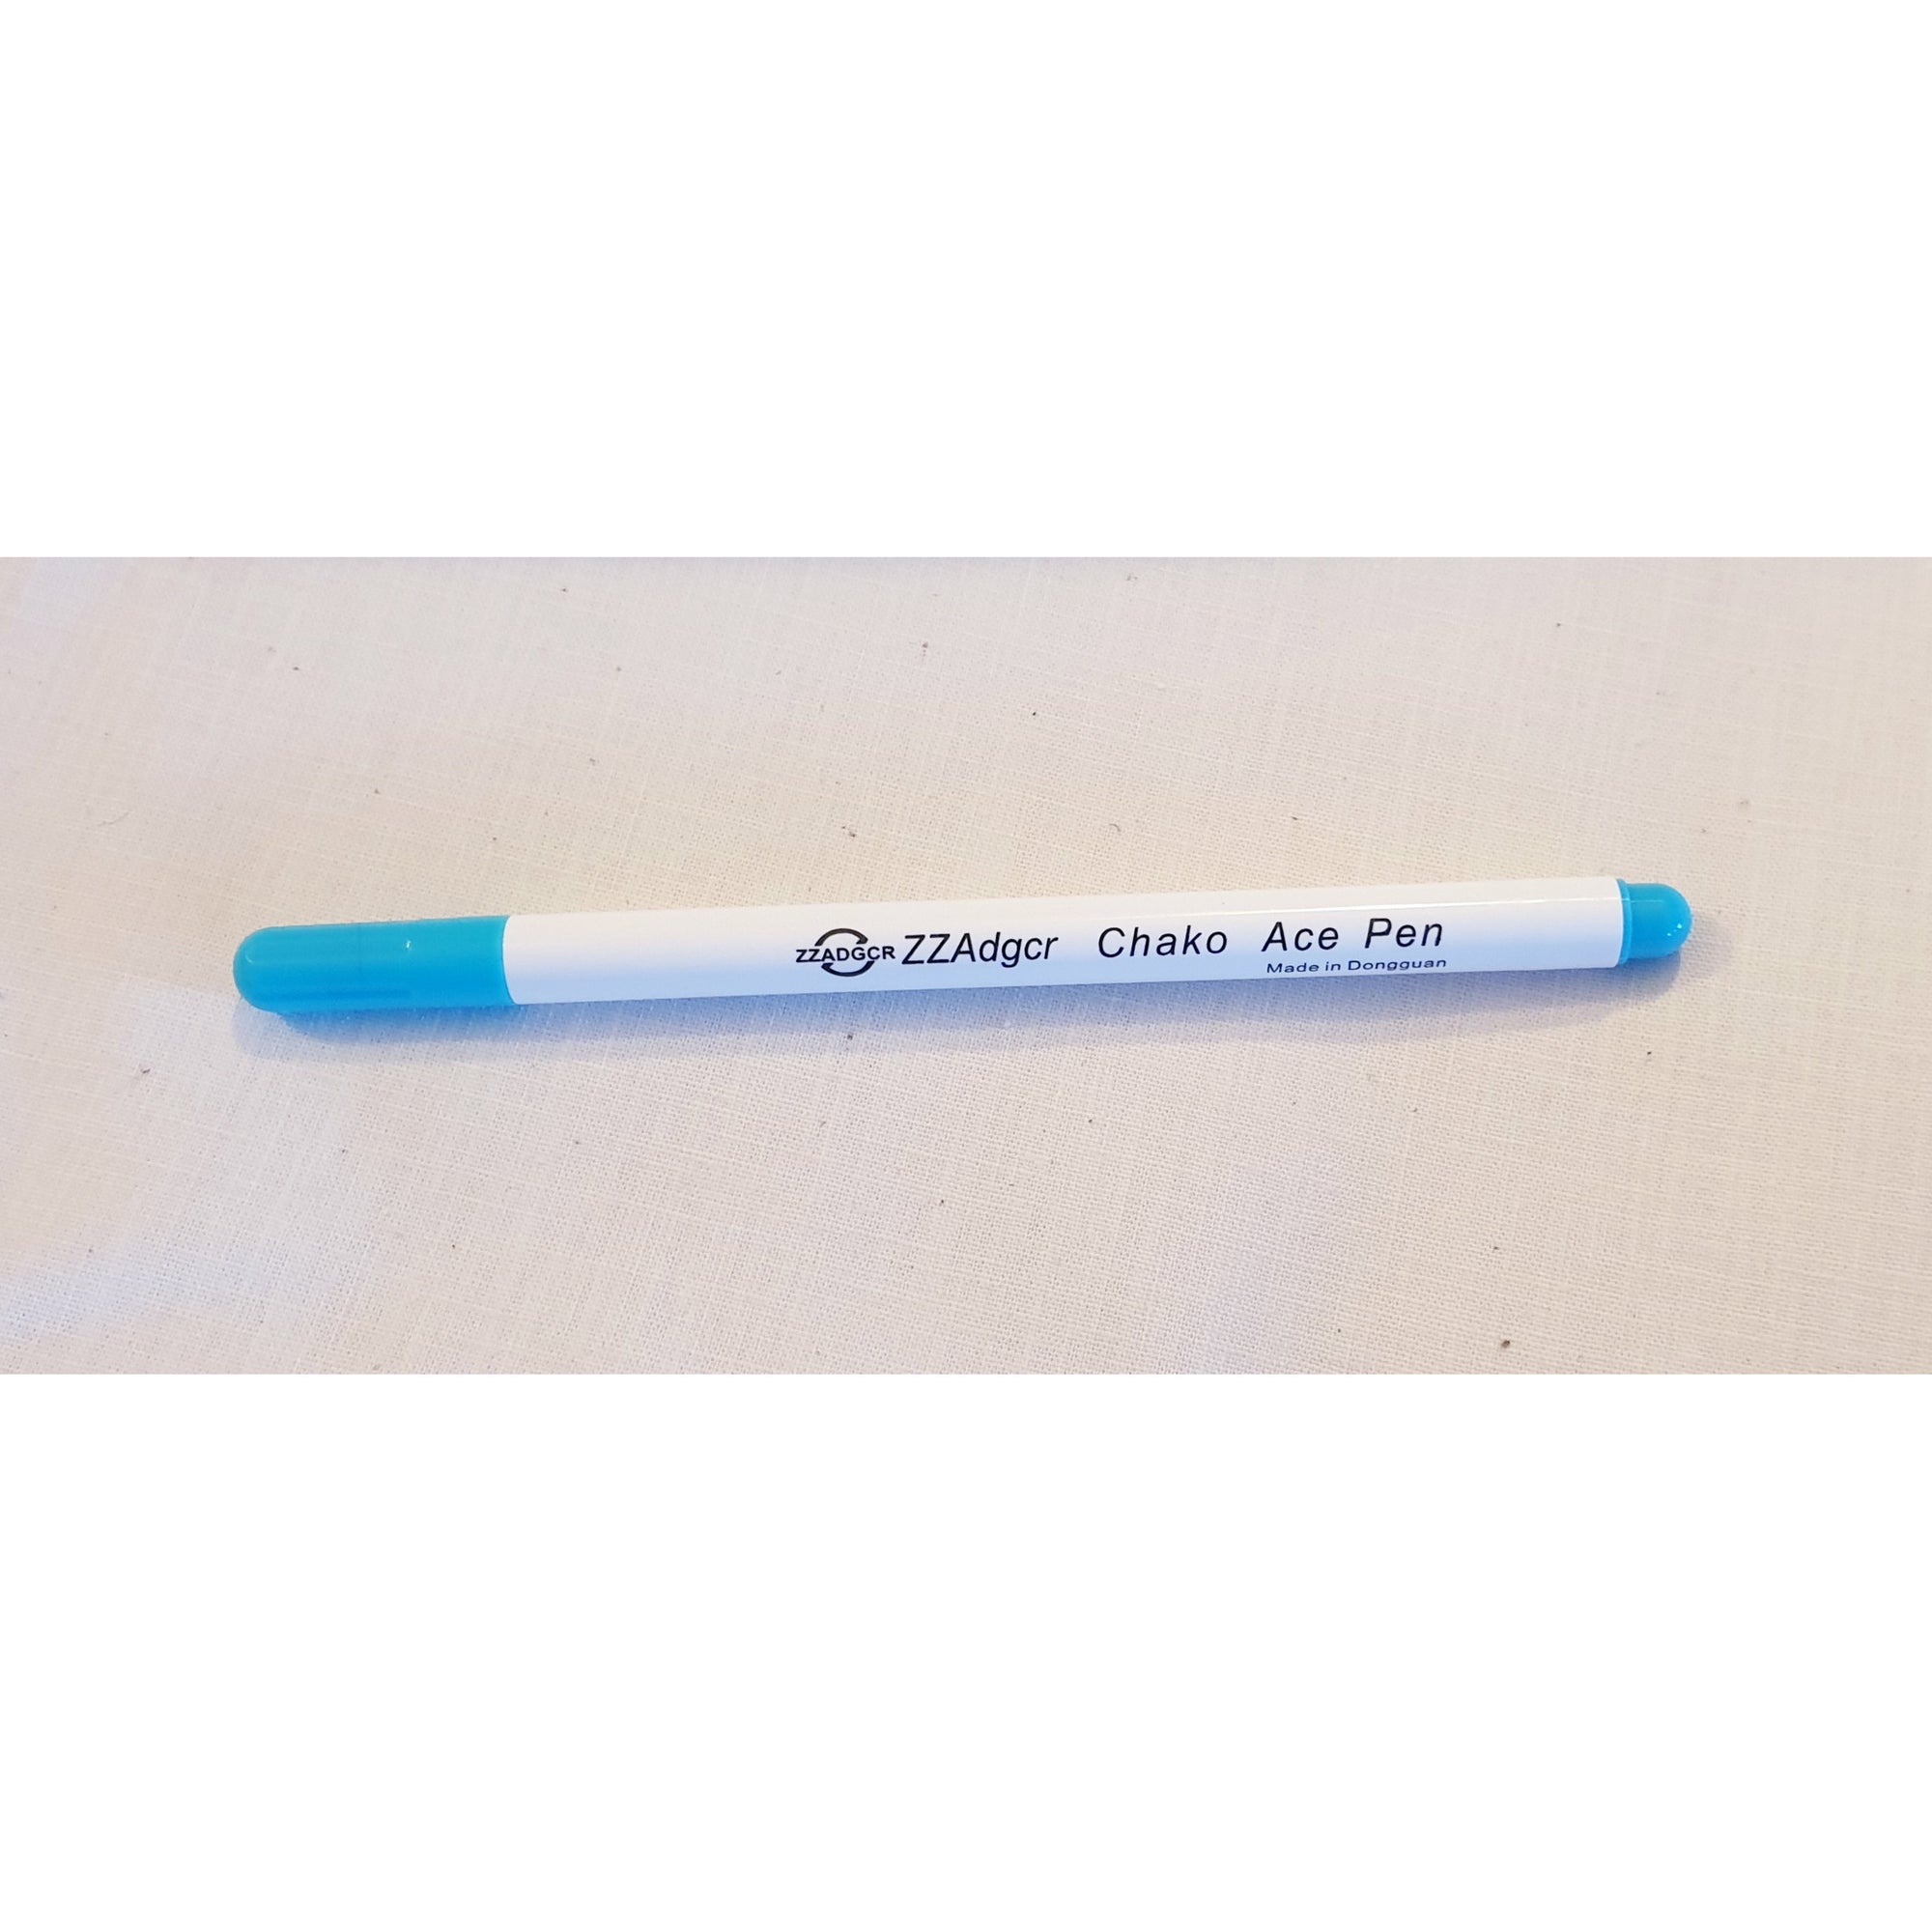 DMC Blue Water Soluble Transfer Pen - All Things EFFY